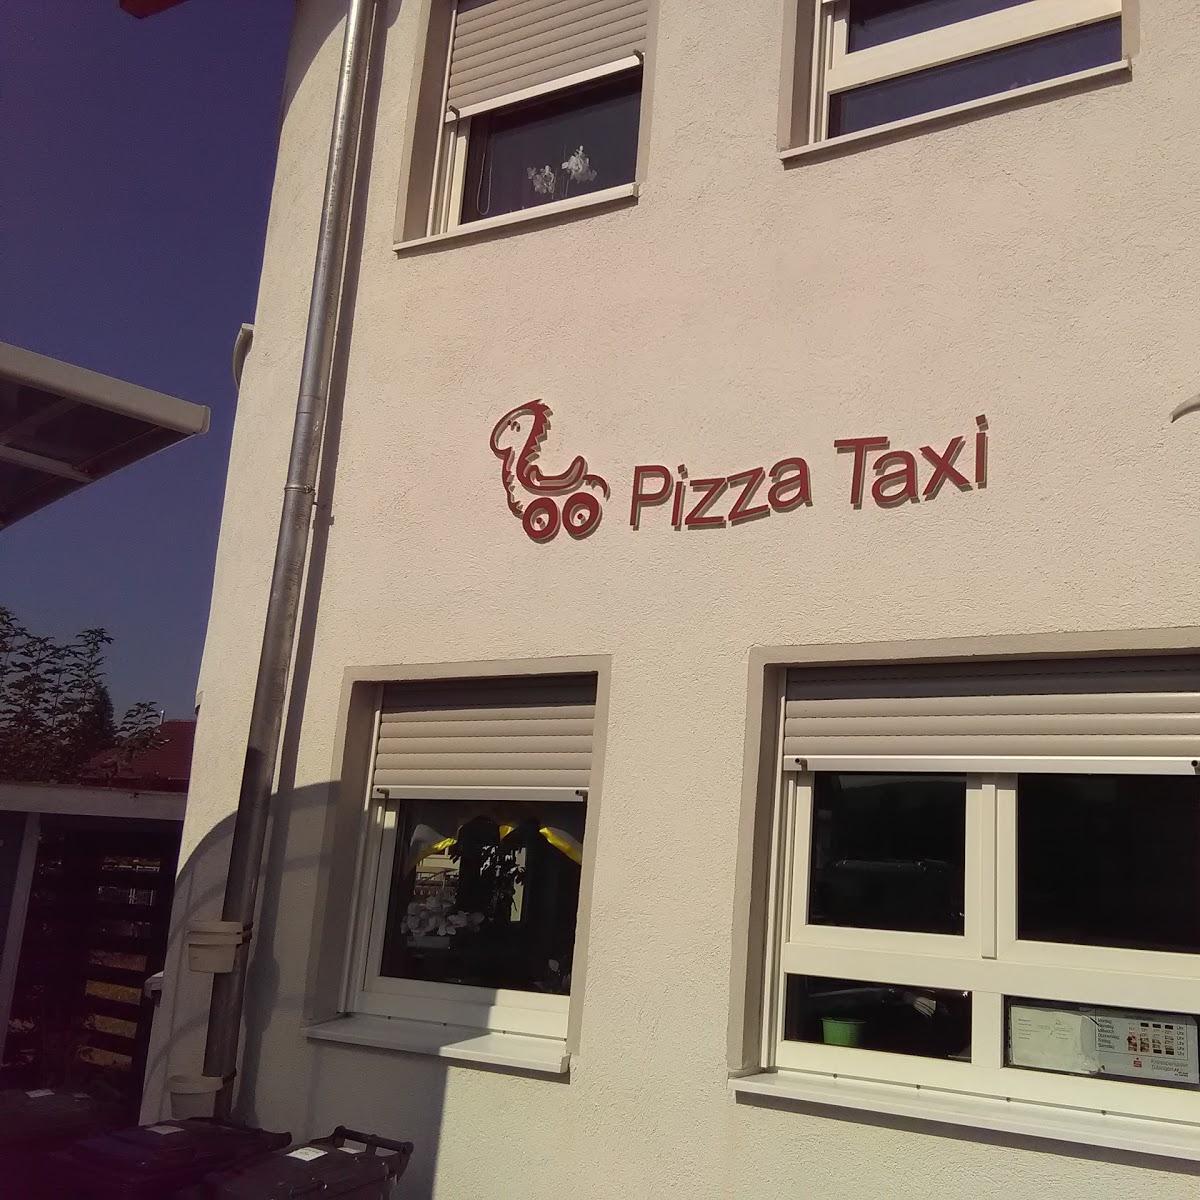 Restaurant "Pizza-Taxi" in  Mössingen